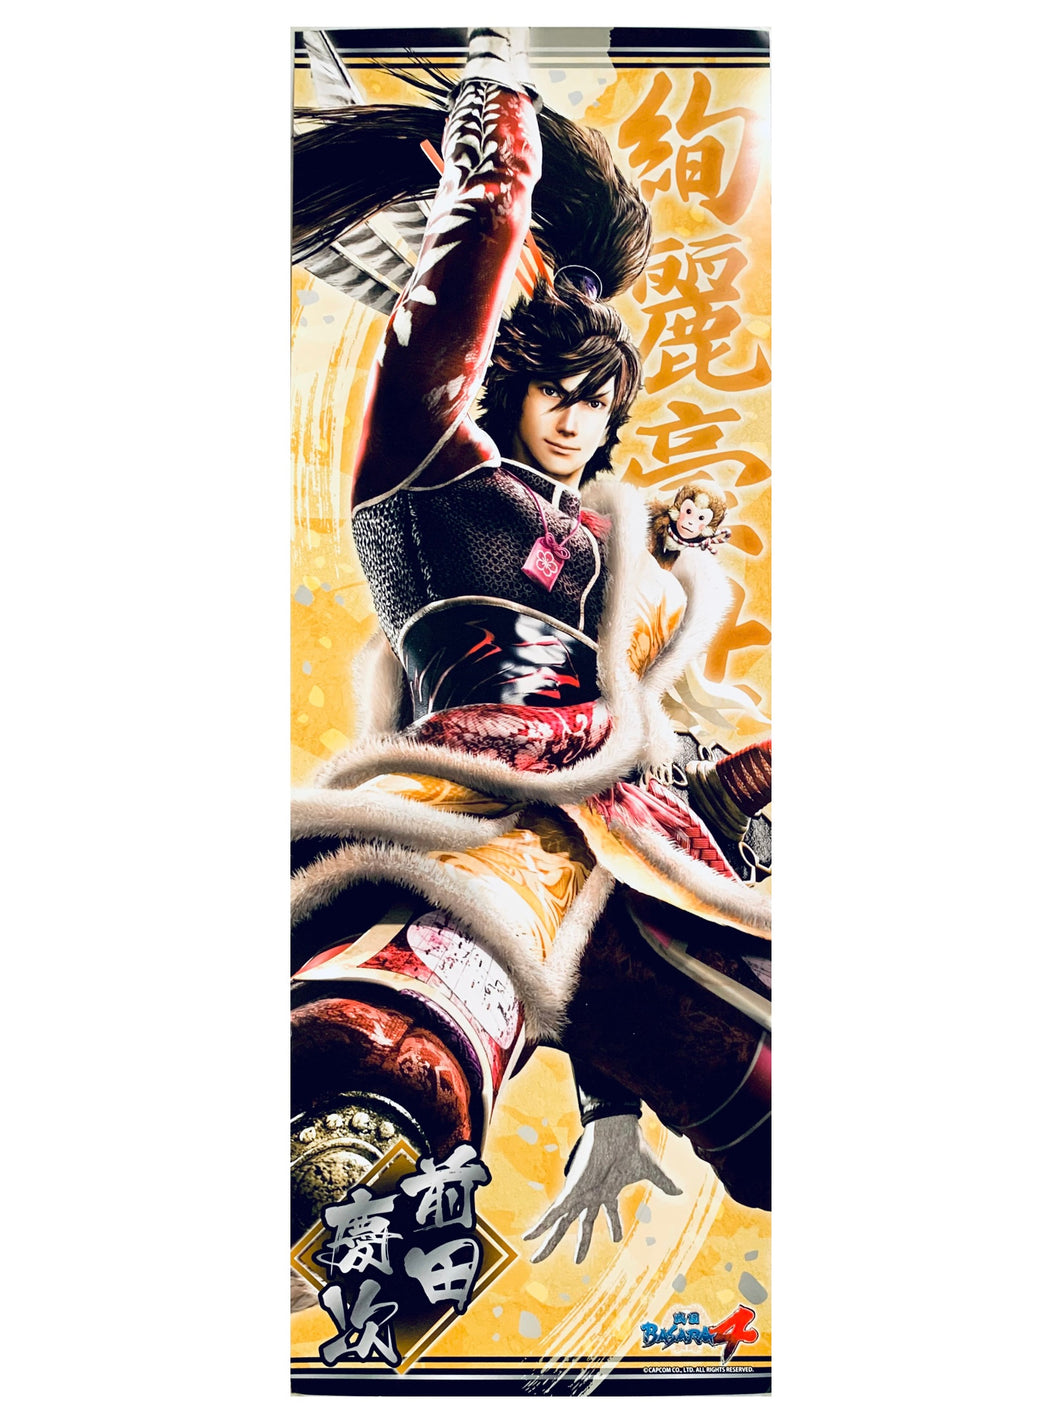 Sengoku Basara 4 - Maeda Keiji - SB4 Chara Pos Collection - Stick Poster